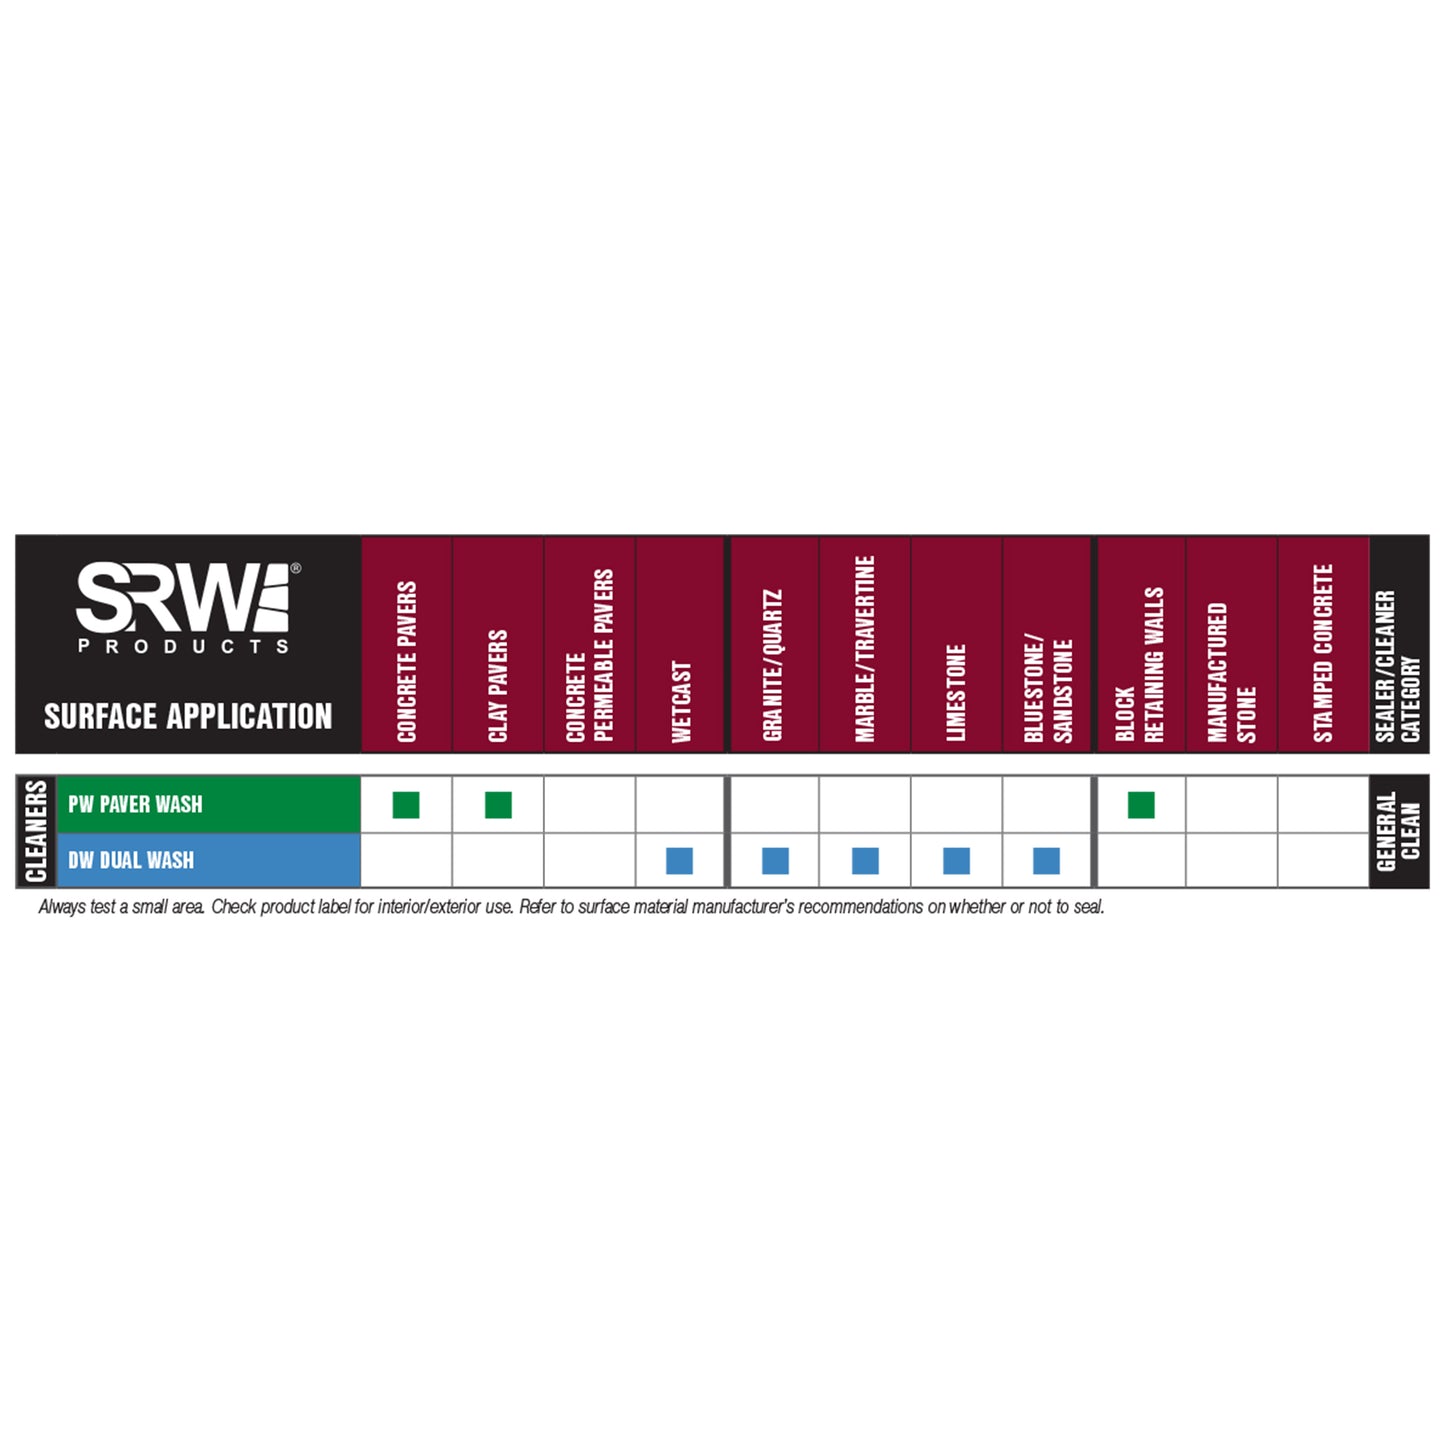 srw products pw paver wash & dual wash comparison chart